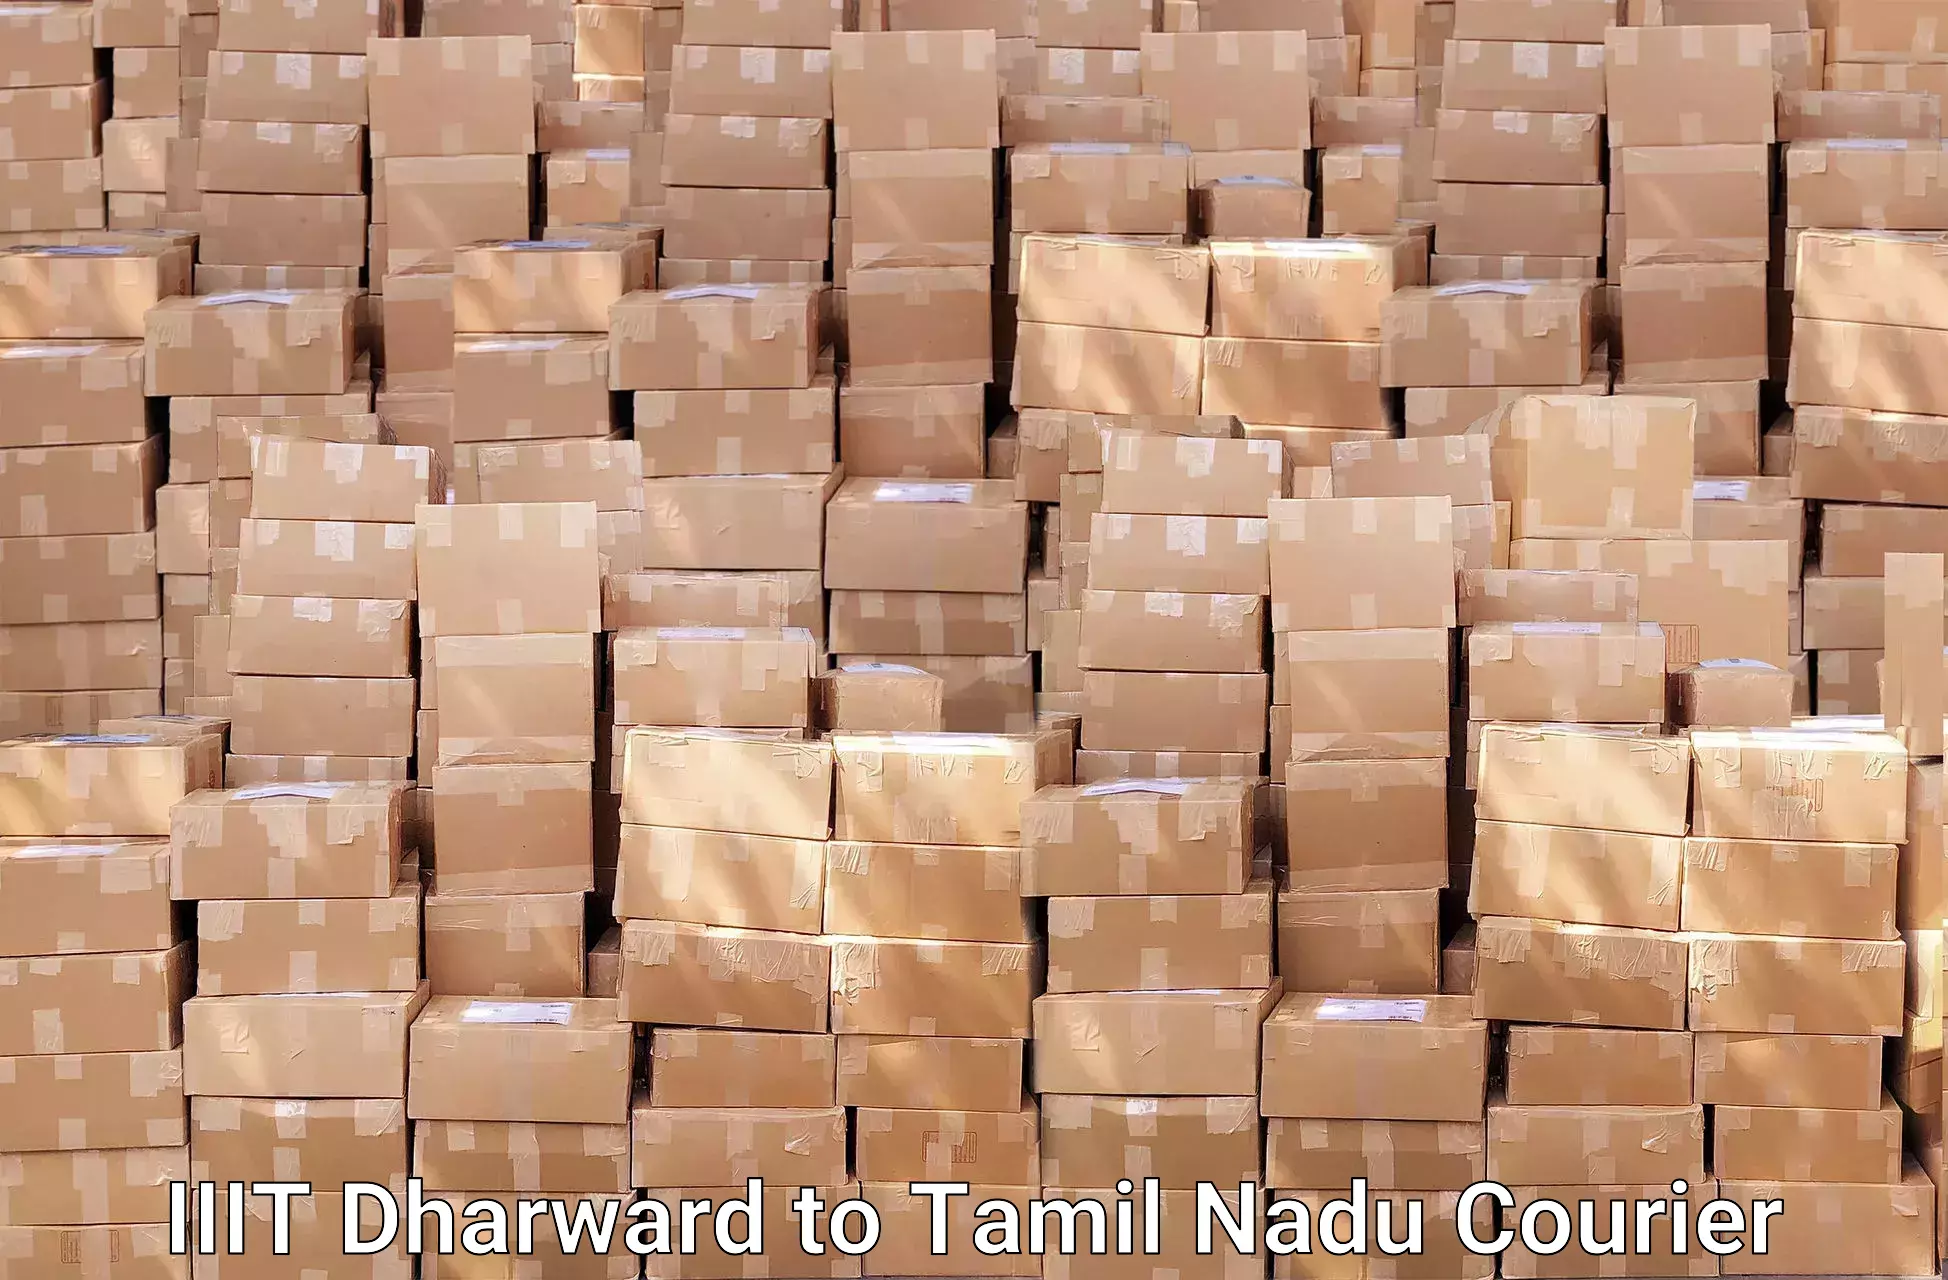 Trusted moving company IIIT Dharward to Tiruvannamalai